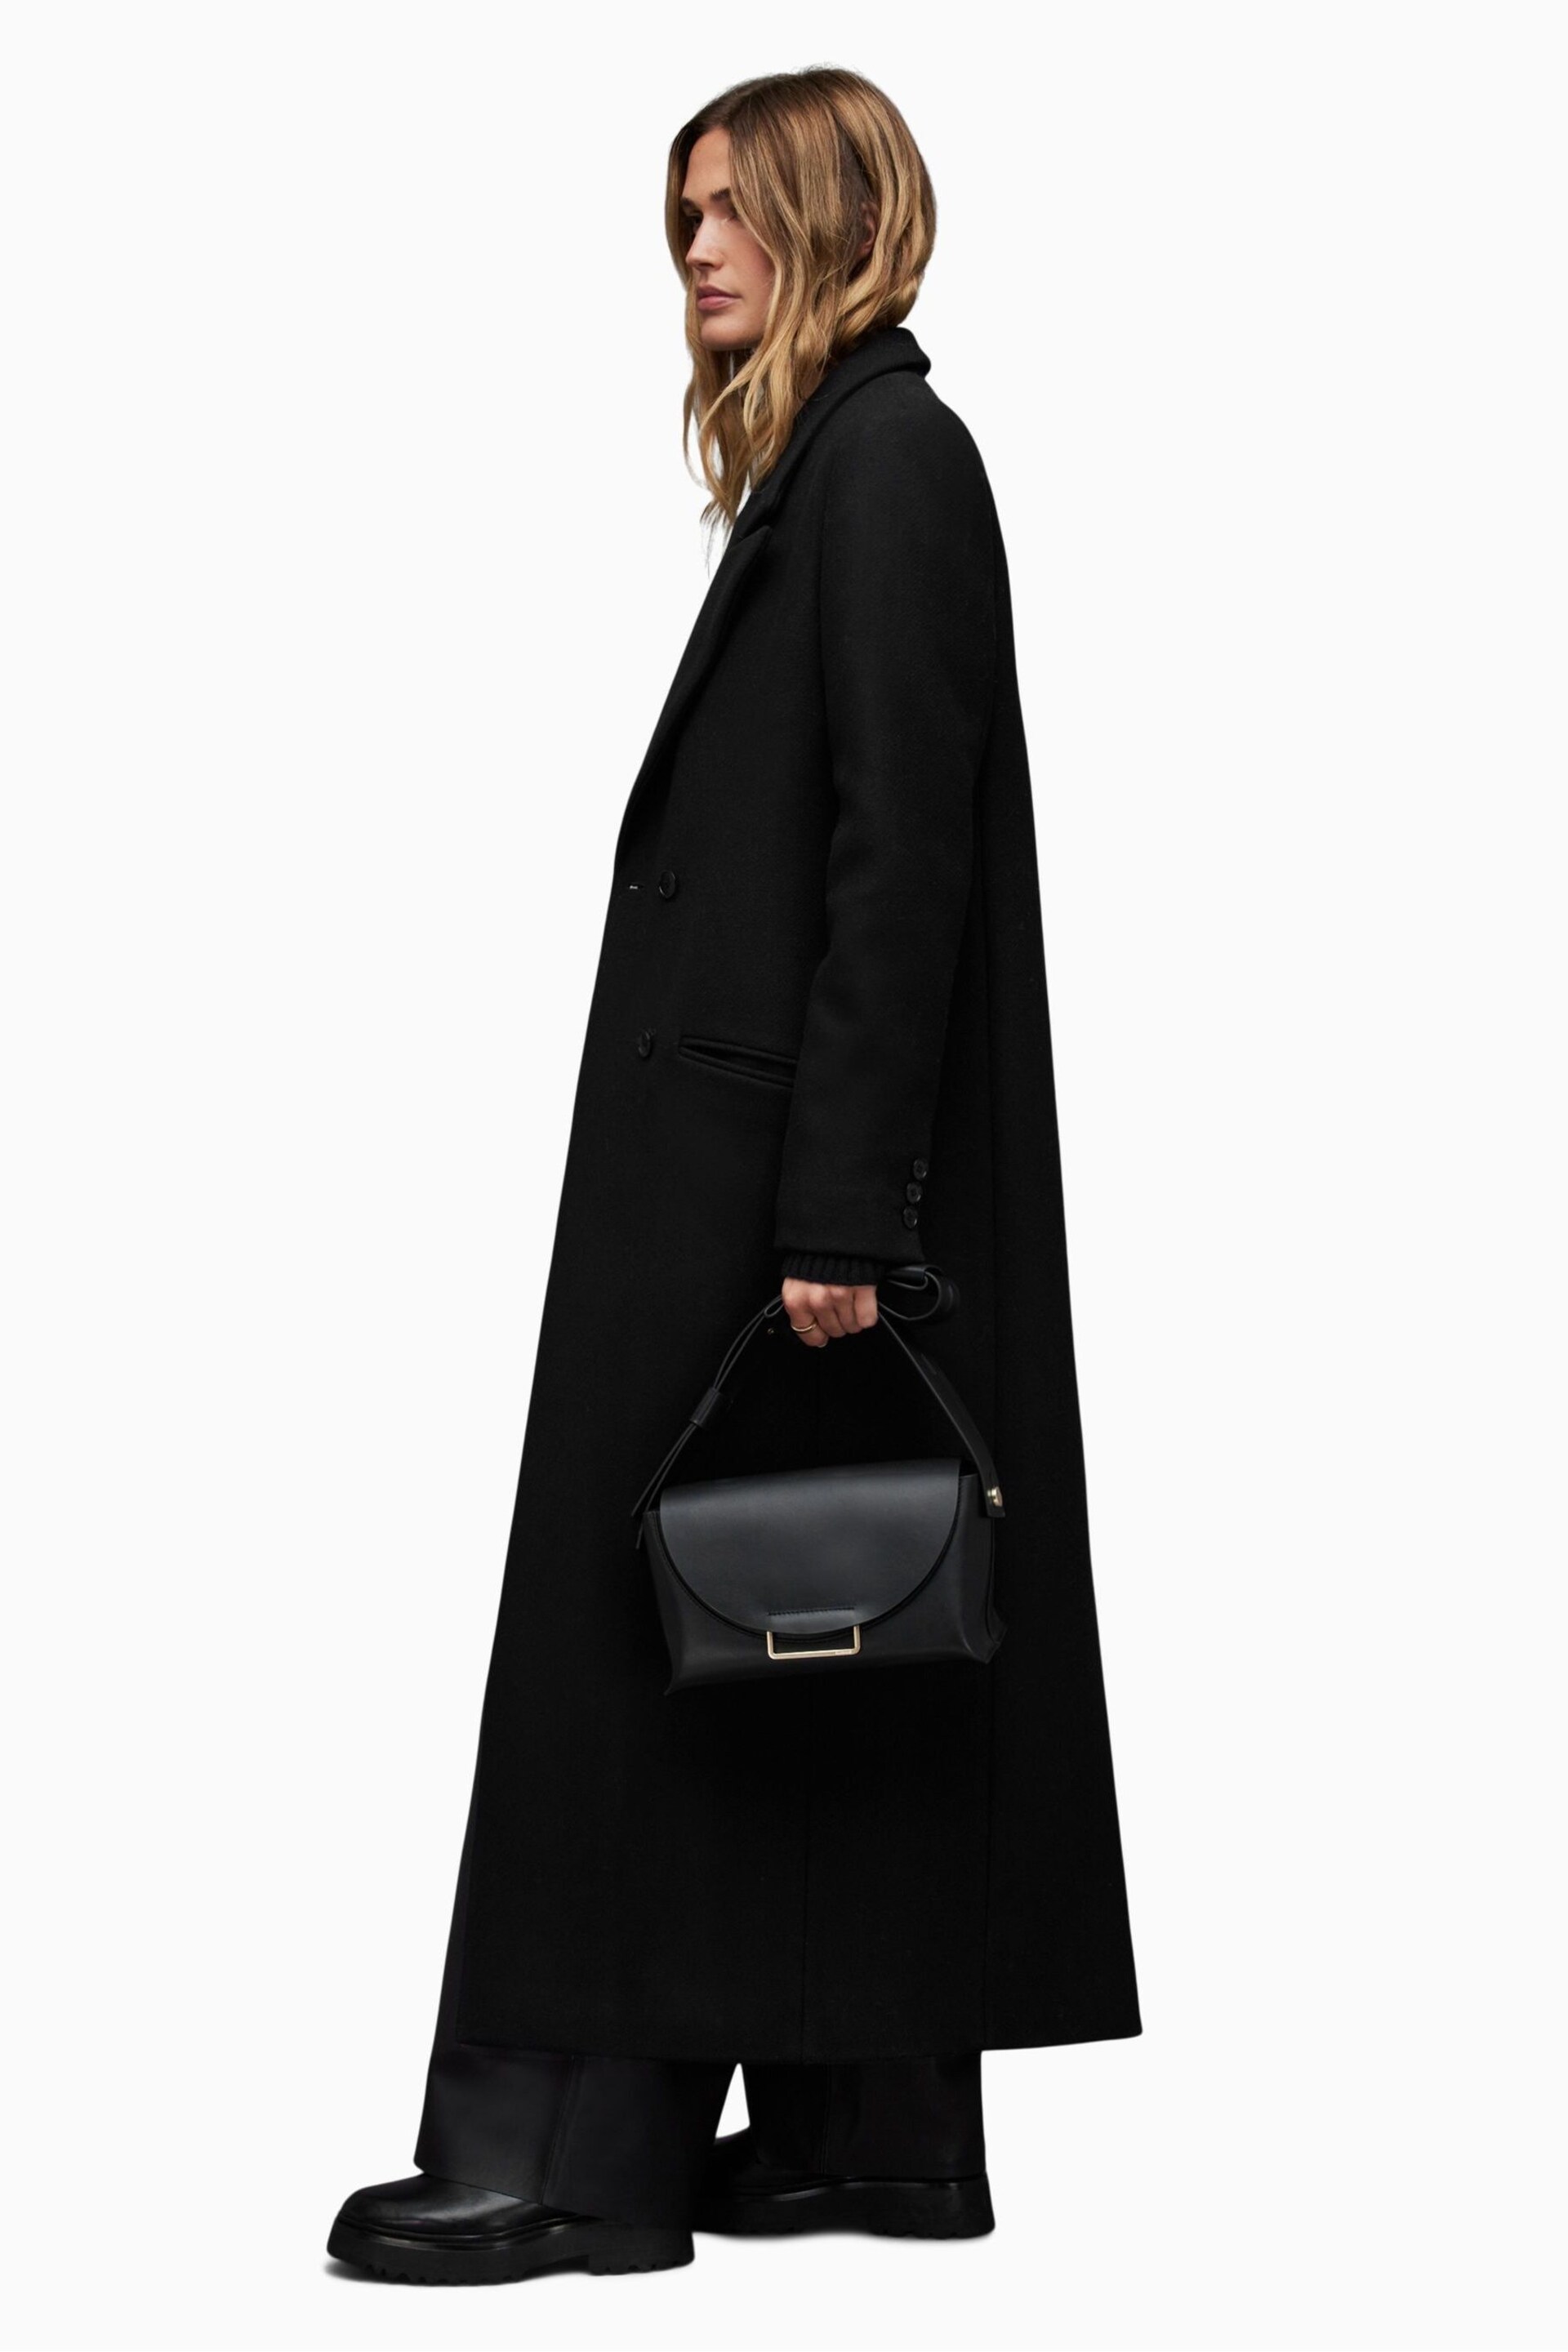 AllSaints Black Ellen Coat - Image 4 of 7